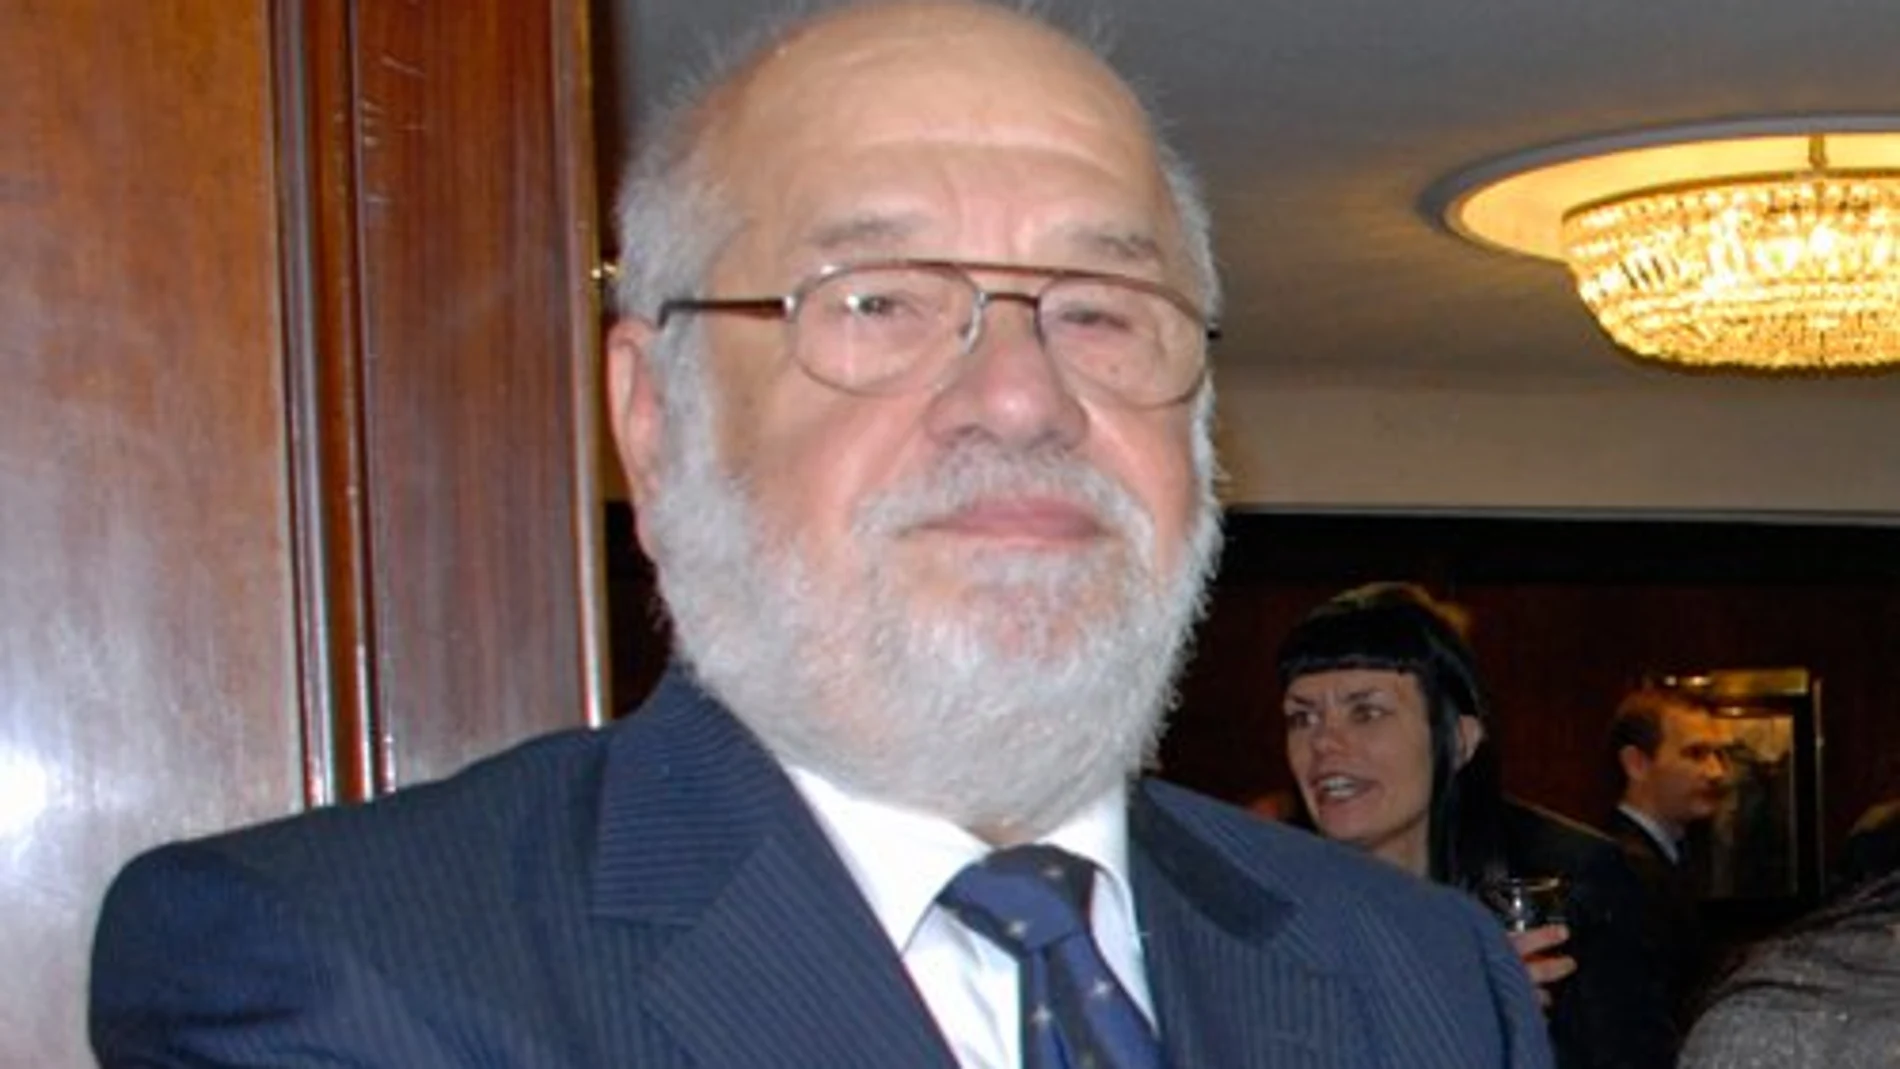 Slobodan Chashuelev, embajador de Macedonia en España